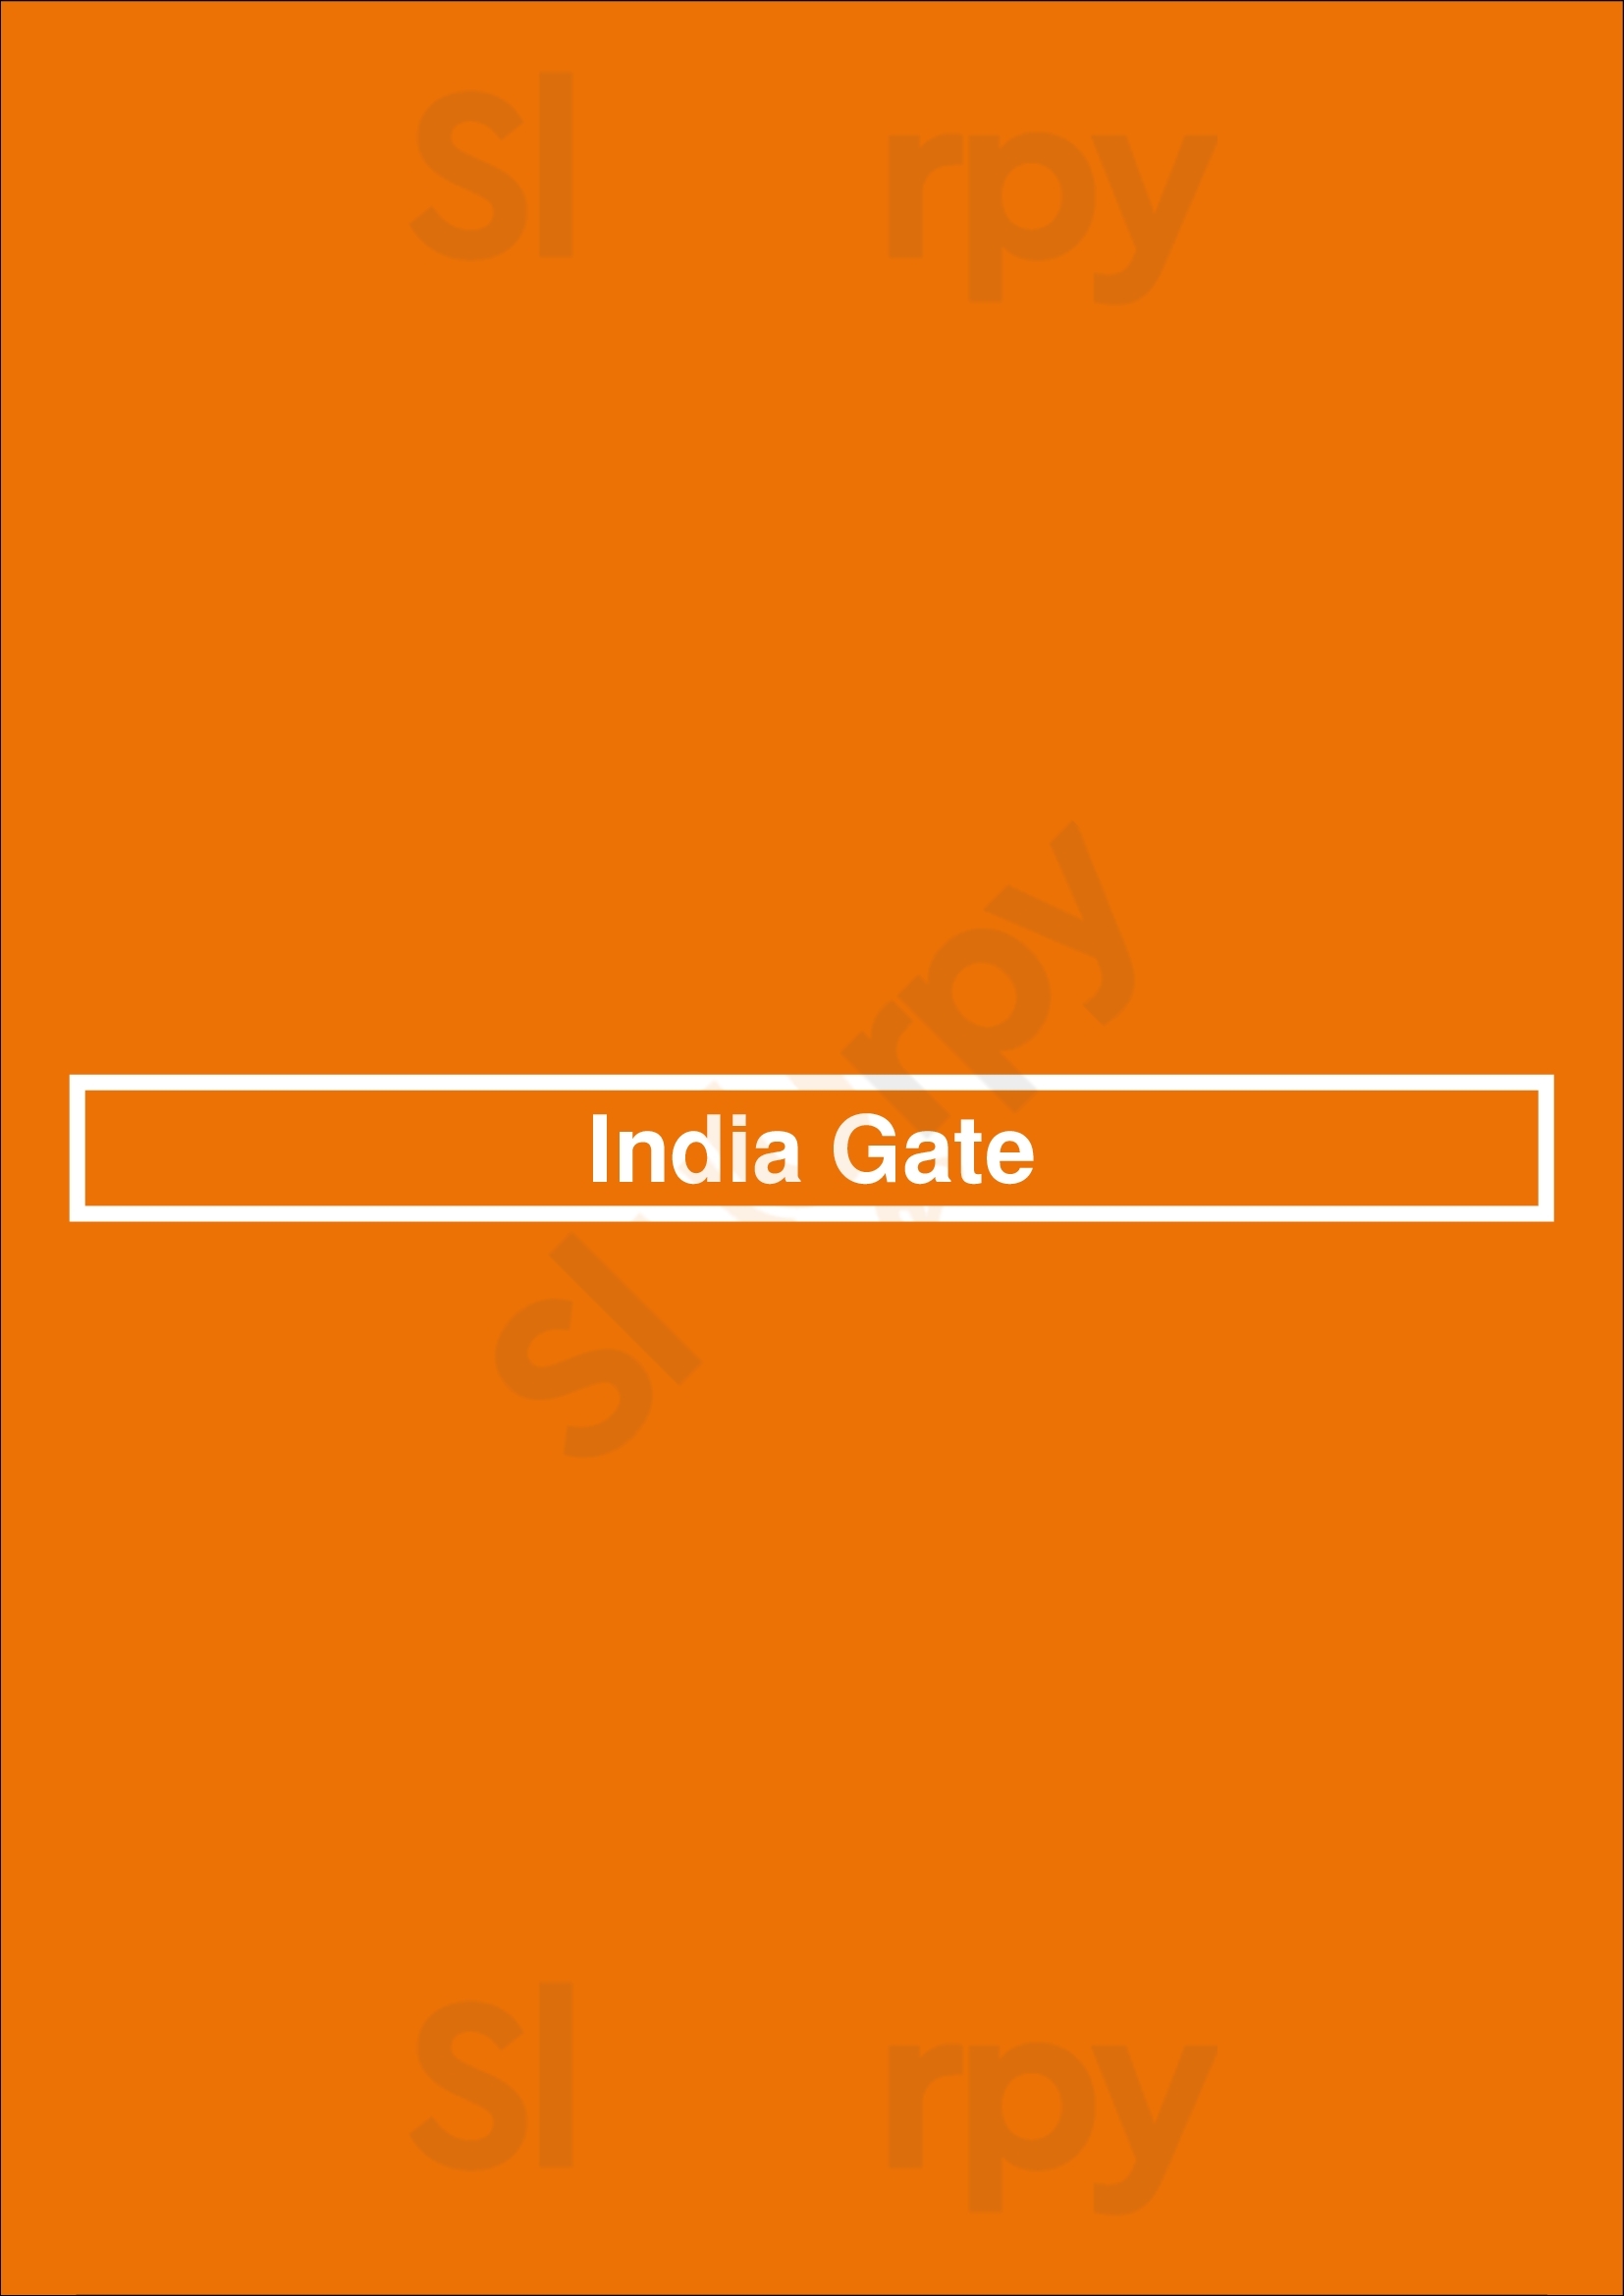 India Gate Paris Menu - 1